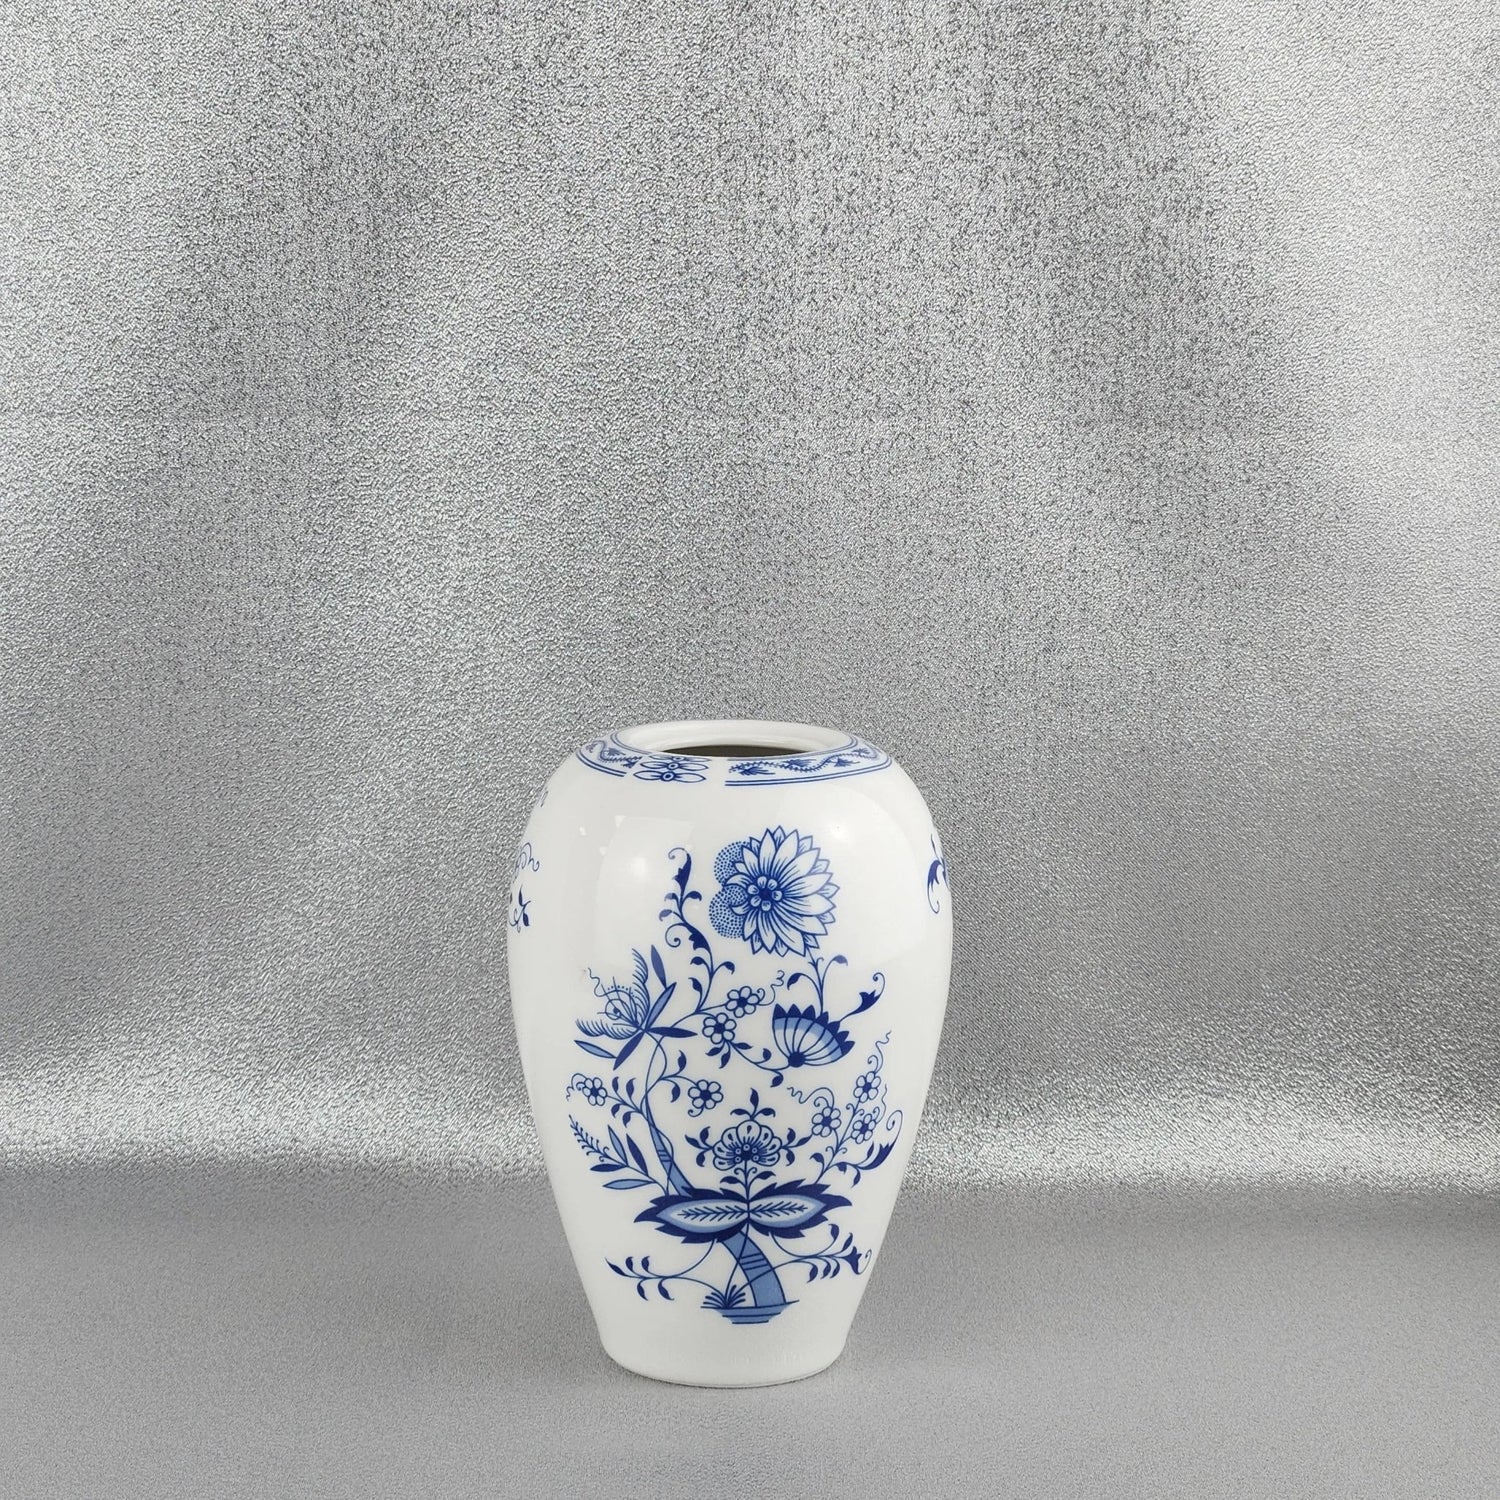 Porcelain Tableware "Blue Onion" Pattern or "Cibulák"